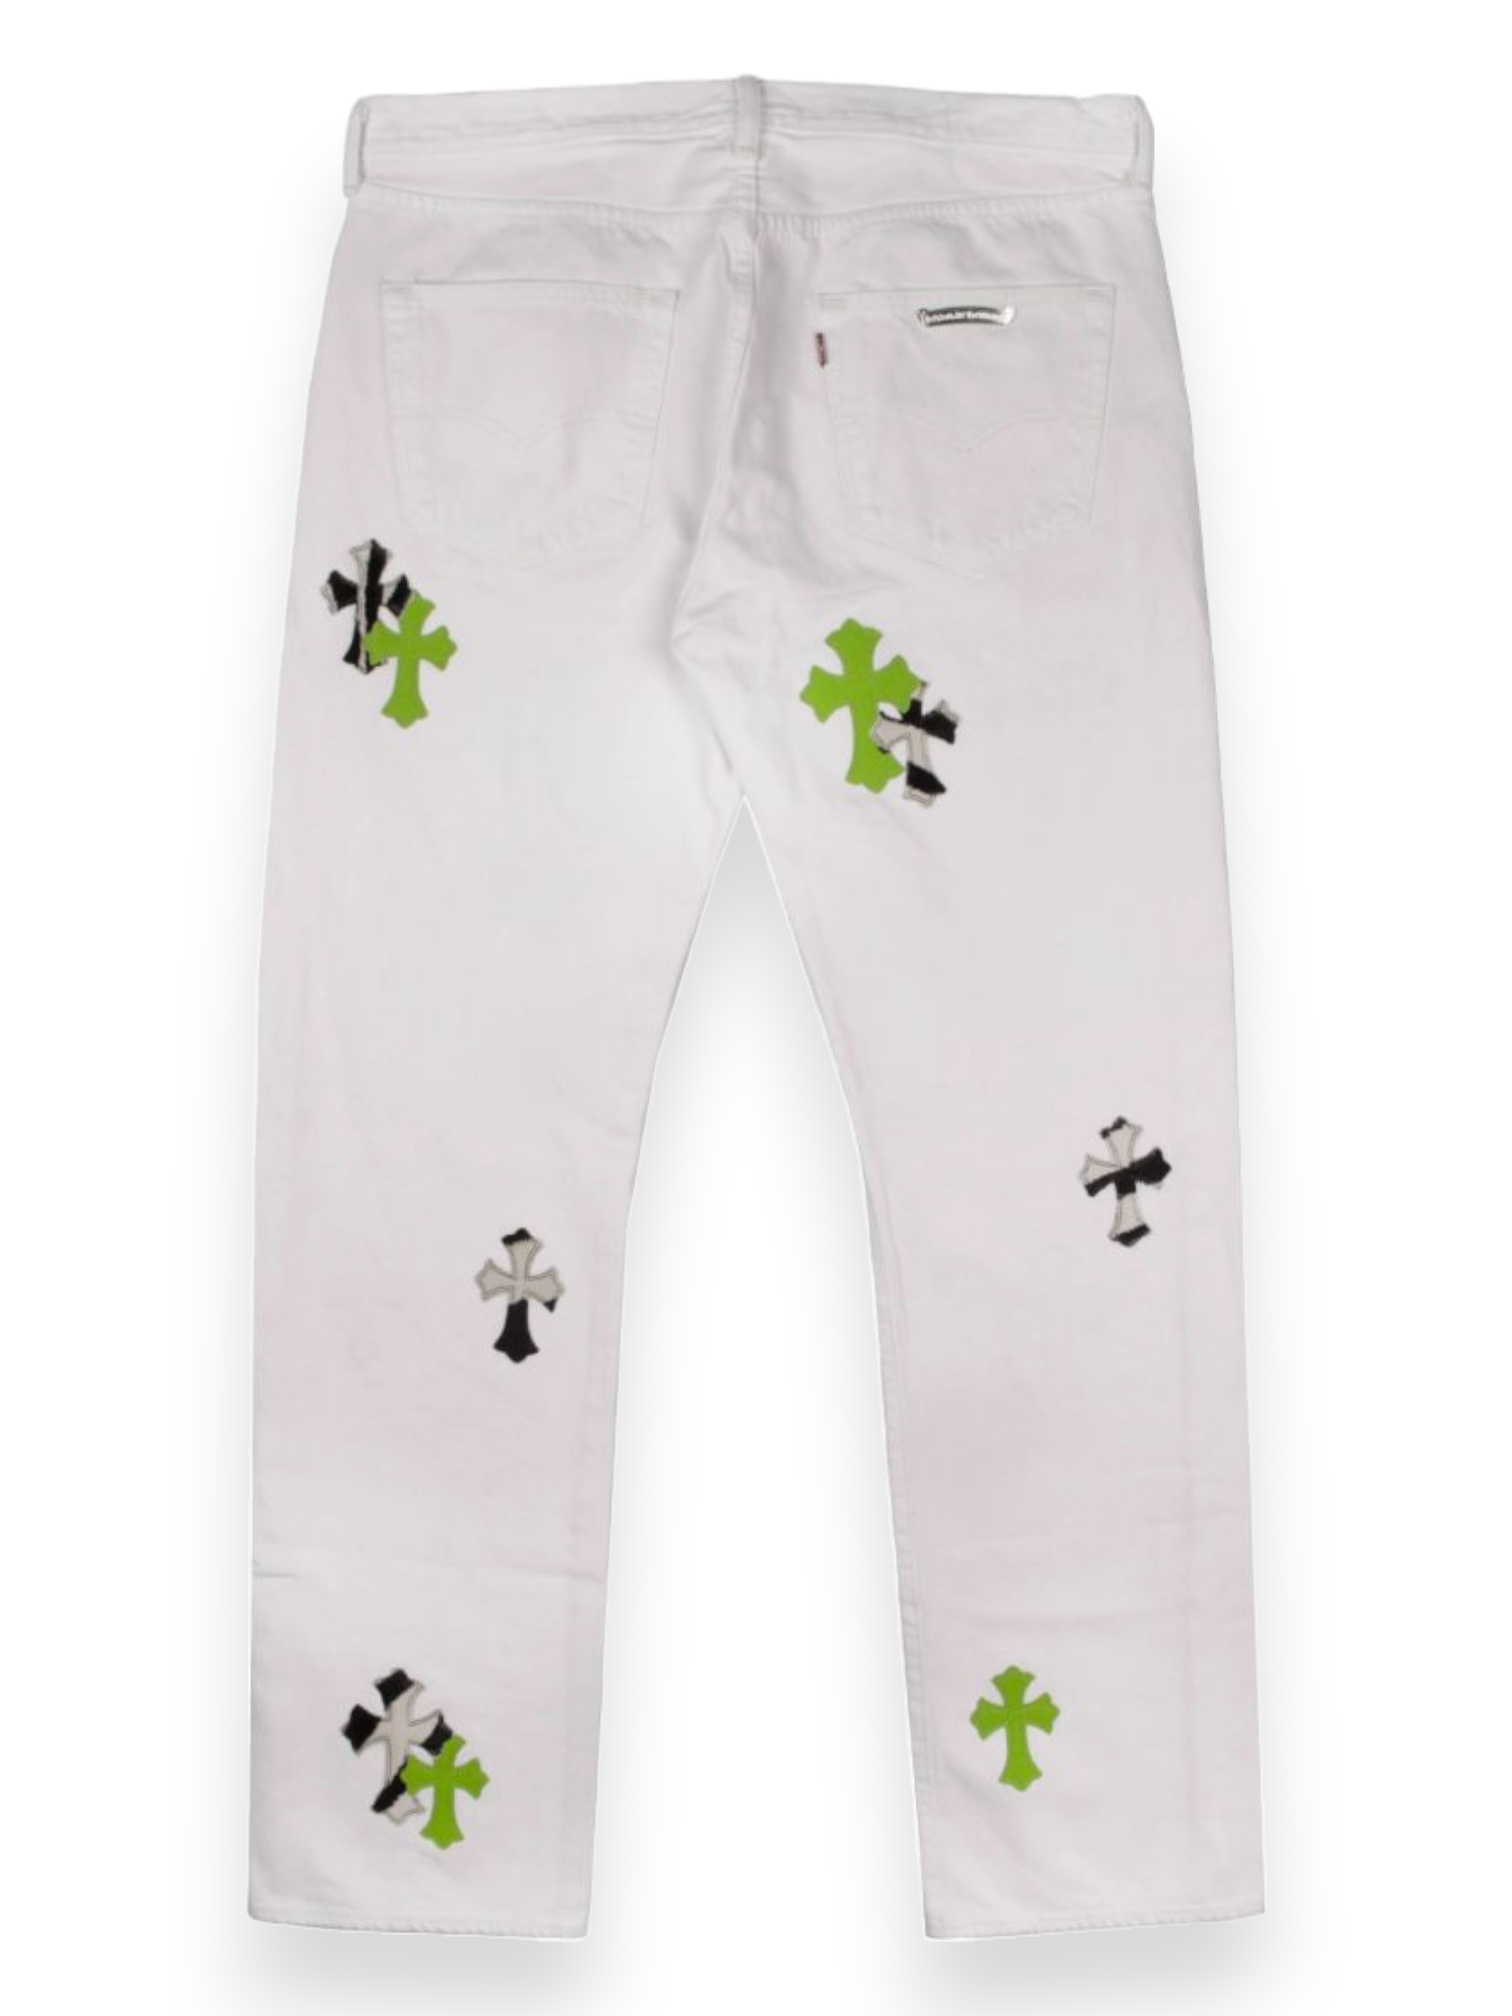 Chrome Hearts Zebra Green Cross Patch White Levi’s Denim Jeans